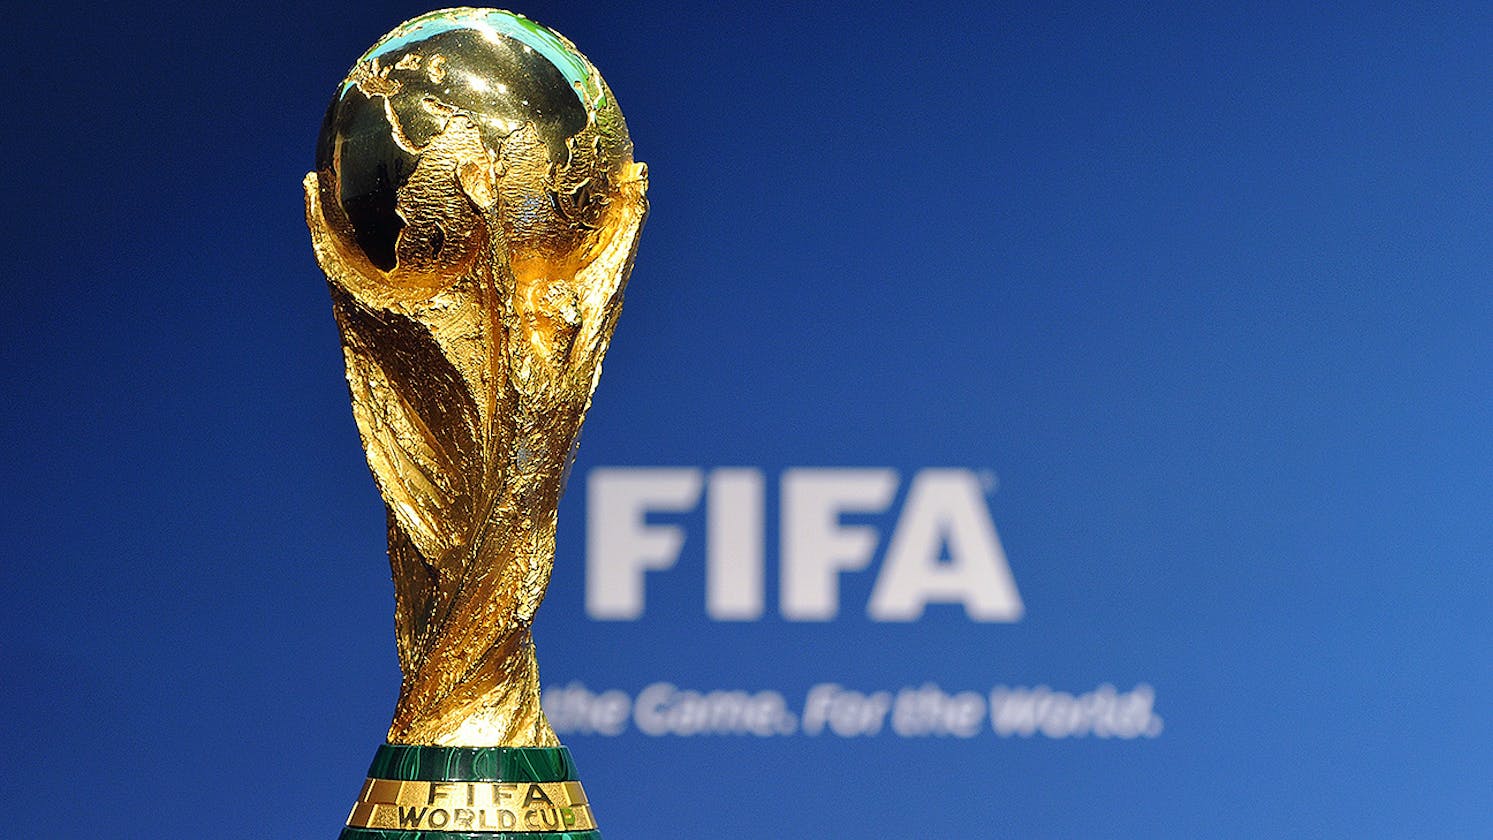 Bootcamp Week 3: FIFA World Cup Data Analysis